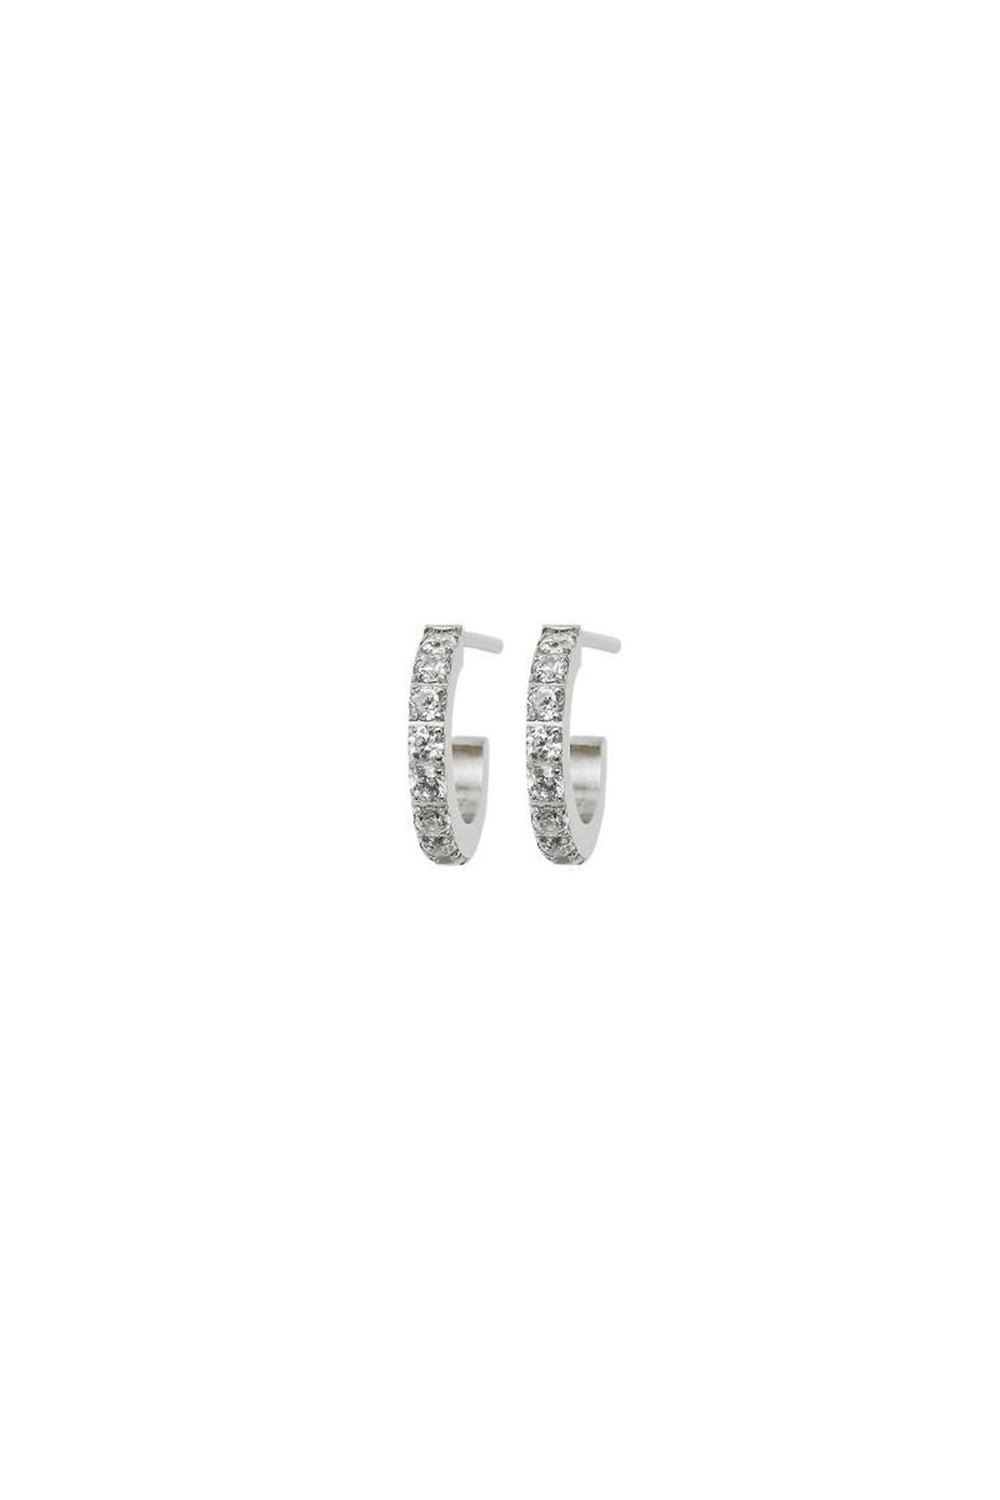 Edblad 120408 Glow Mini Steel Earrings - Olivia Grace Fashion